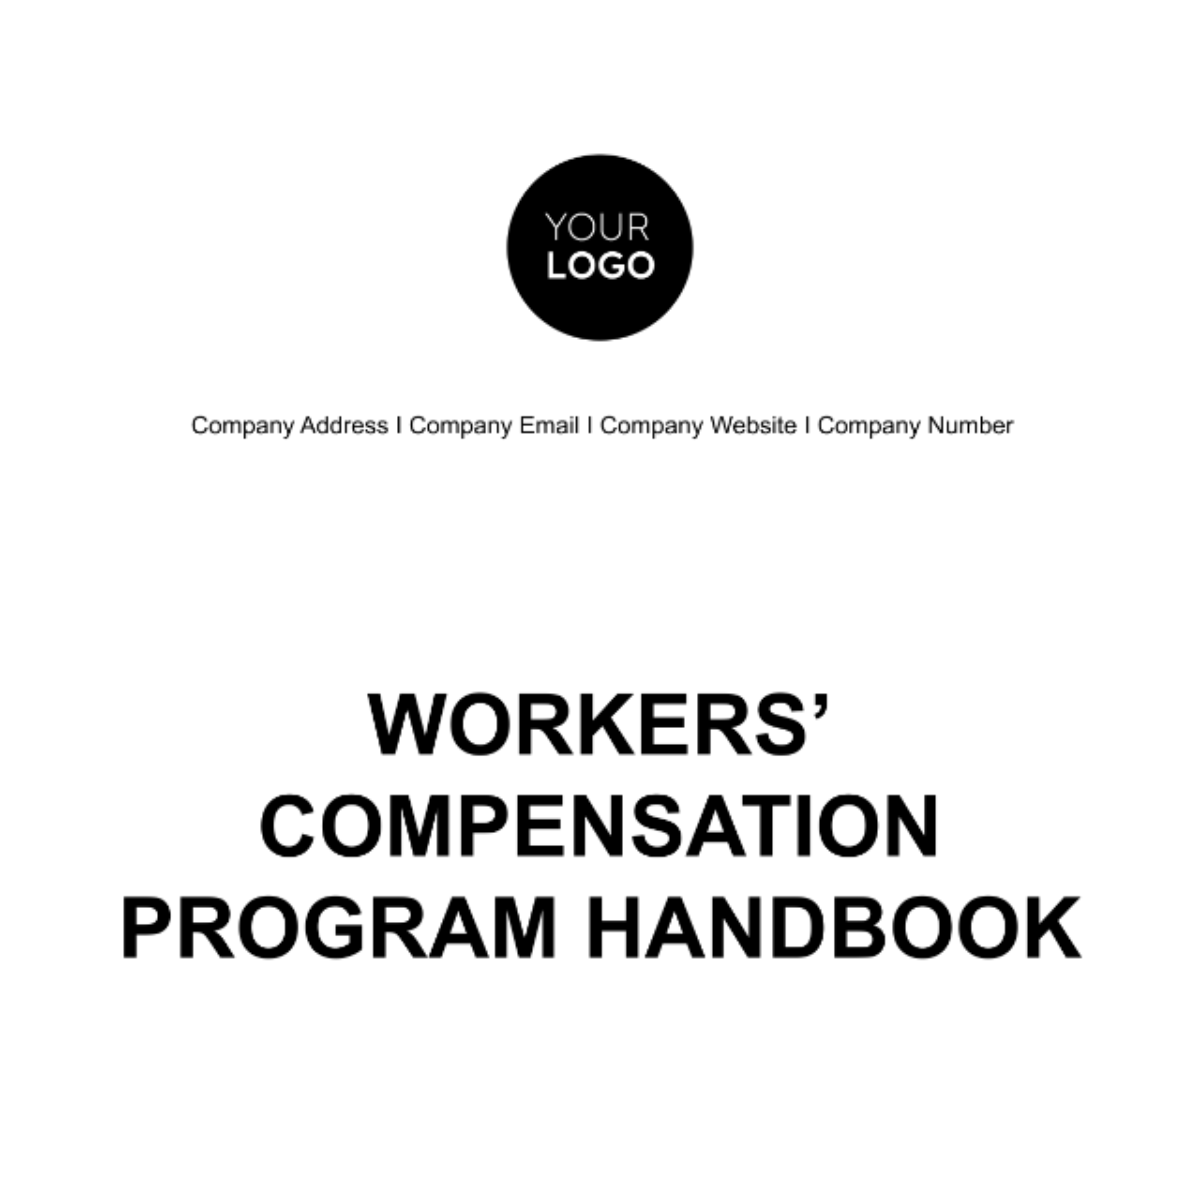 Workers' Compensation Program Handbook HR Template